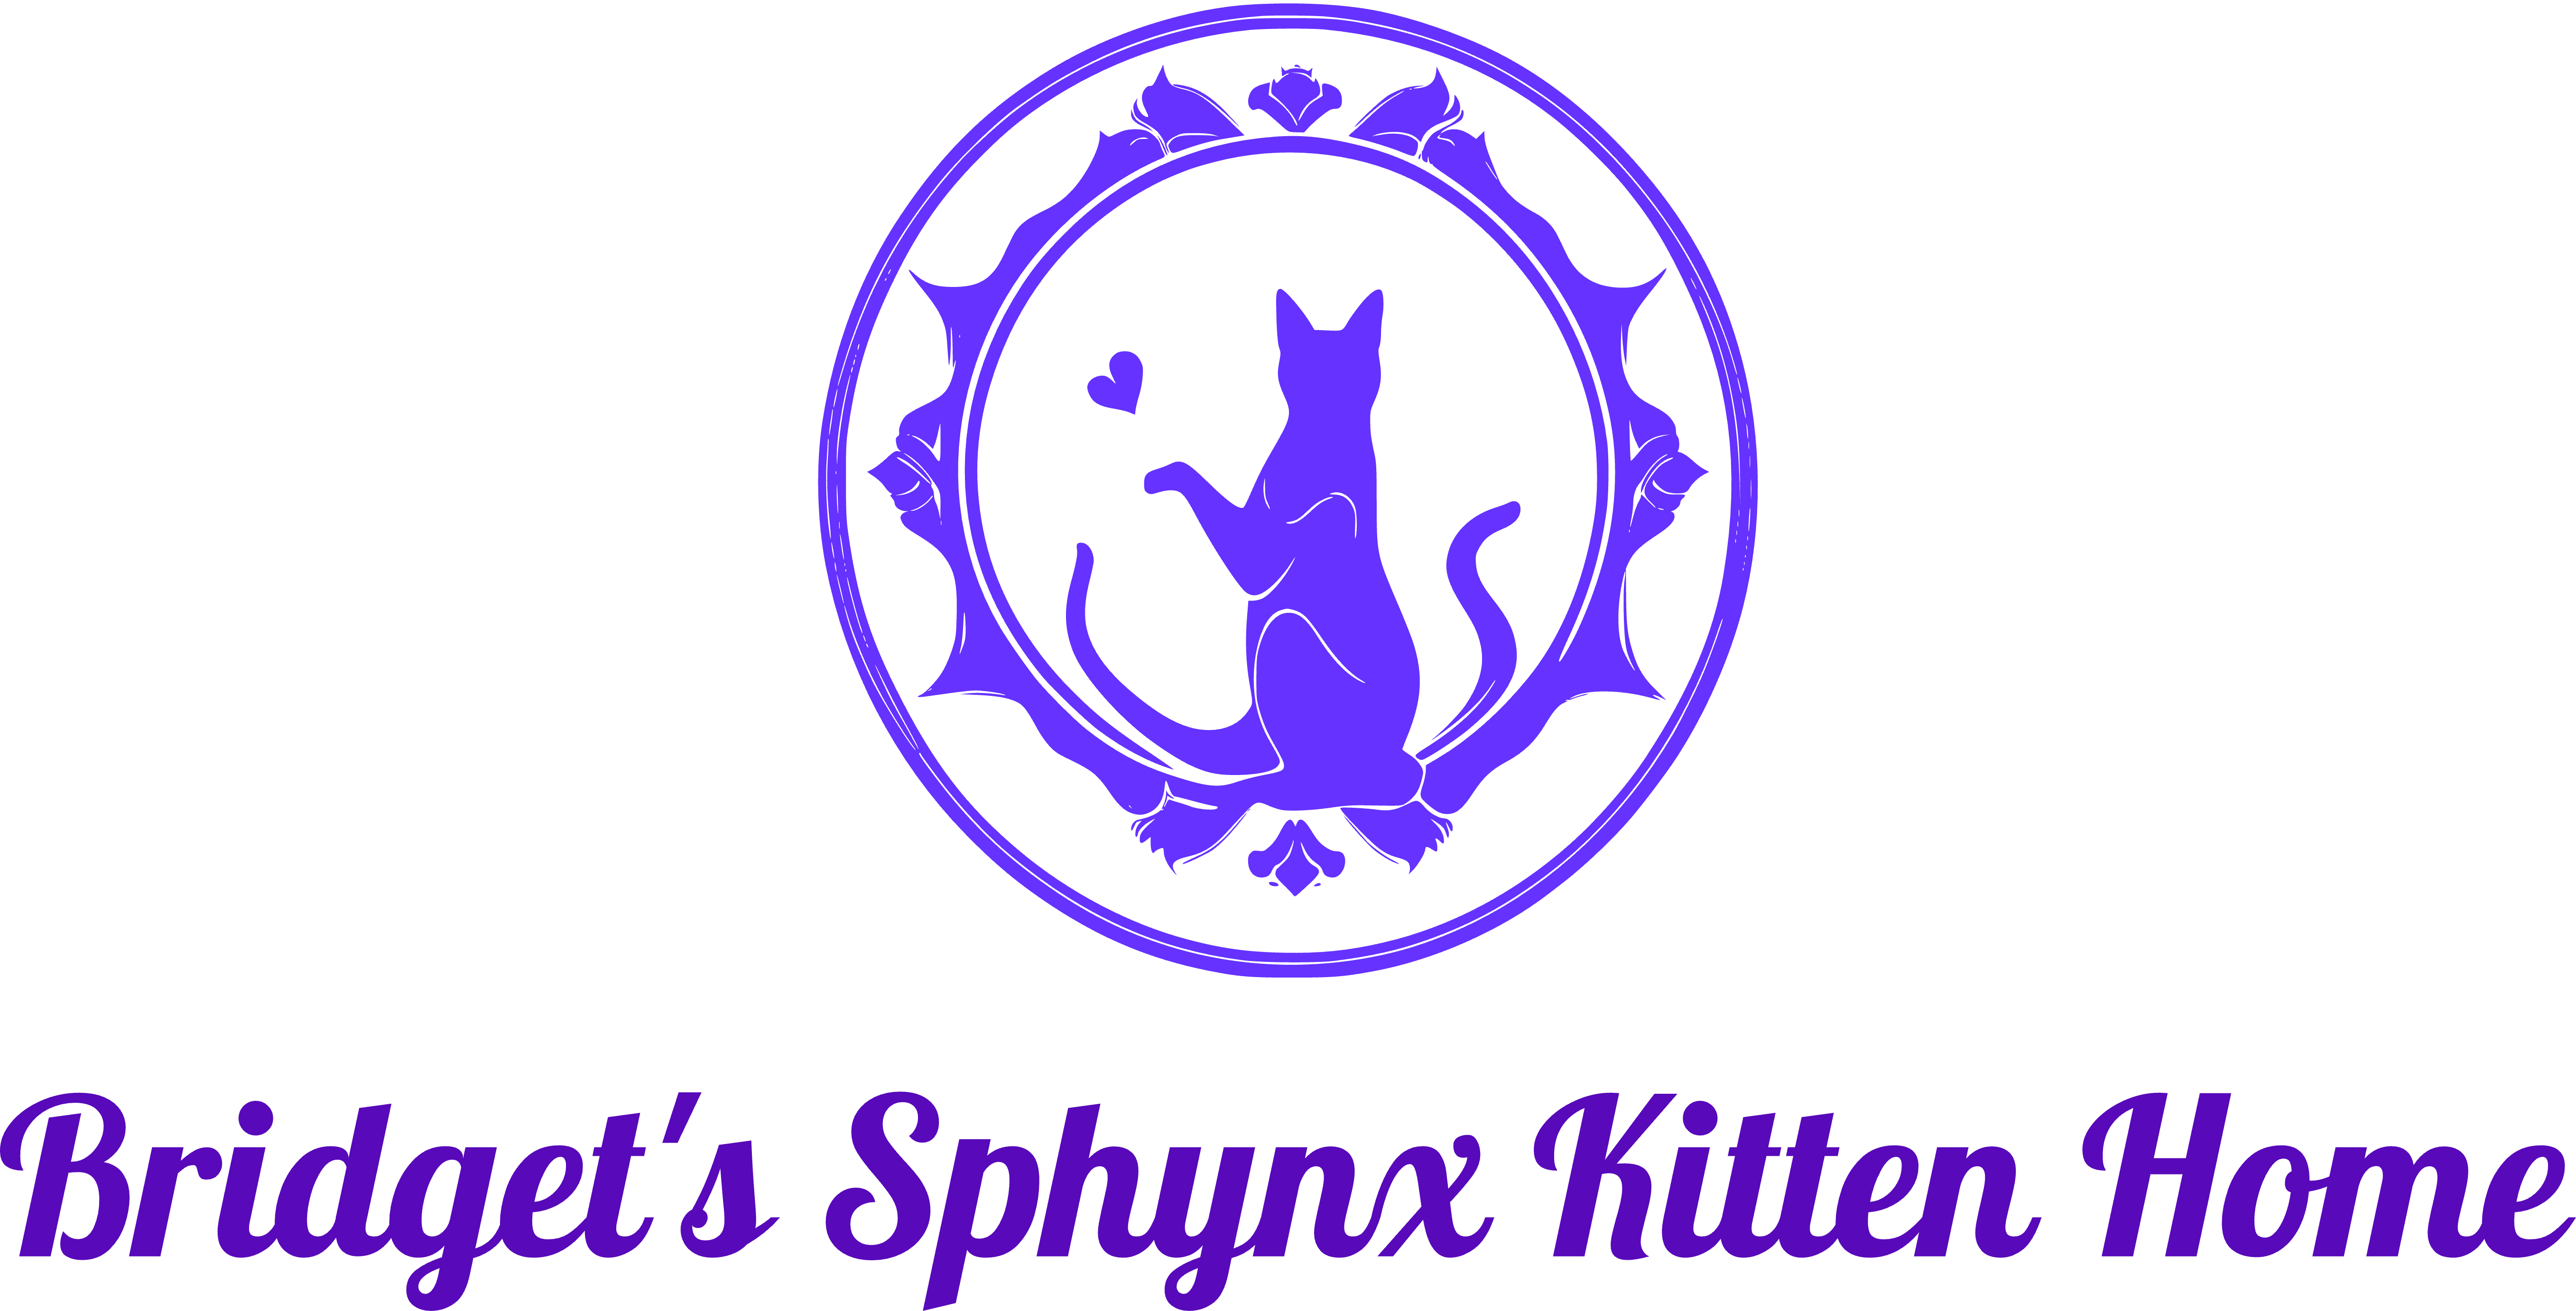 Bridget Sphynx Kitten Home